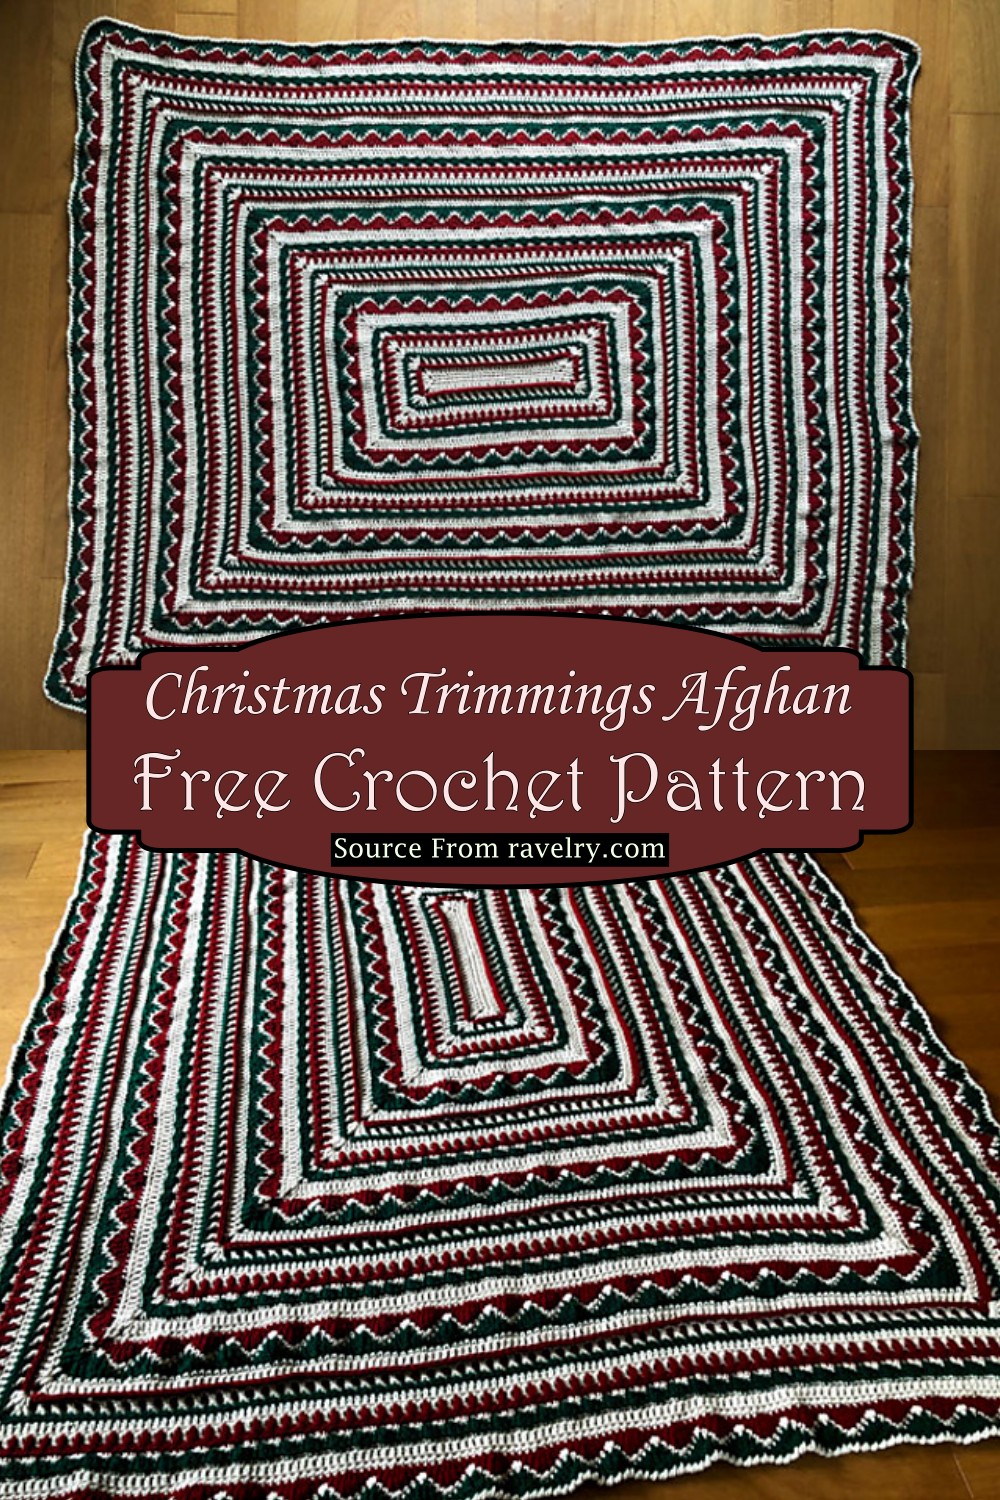 Crochet Christmas Trimmings Afghan Pattern